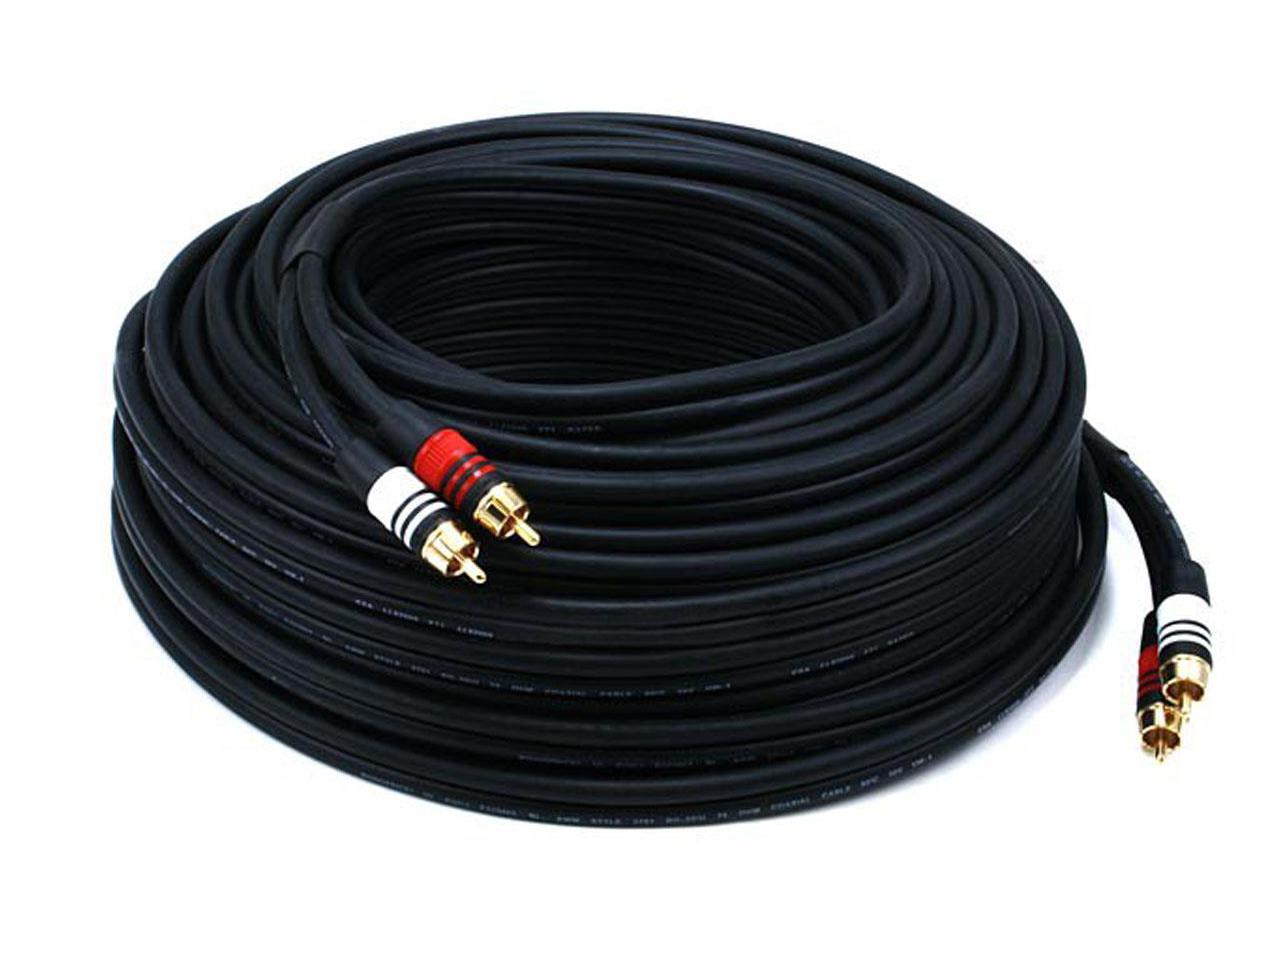 Monoprice Premium RCA Cable - 100 Feet - Black | 2 RCA Plug to 2 RCA Plug, Male to Male, 22AWG - image 1 of 5